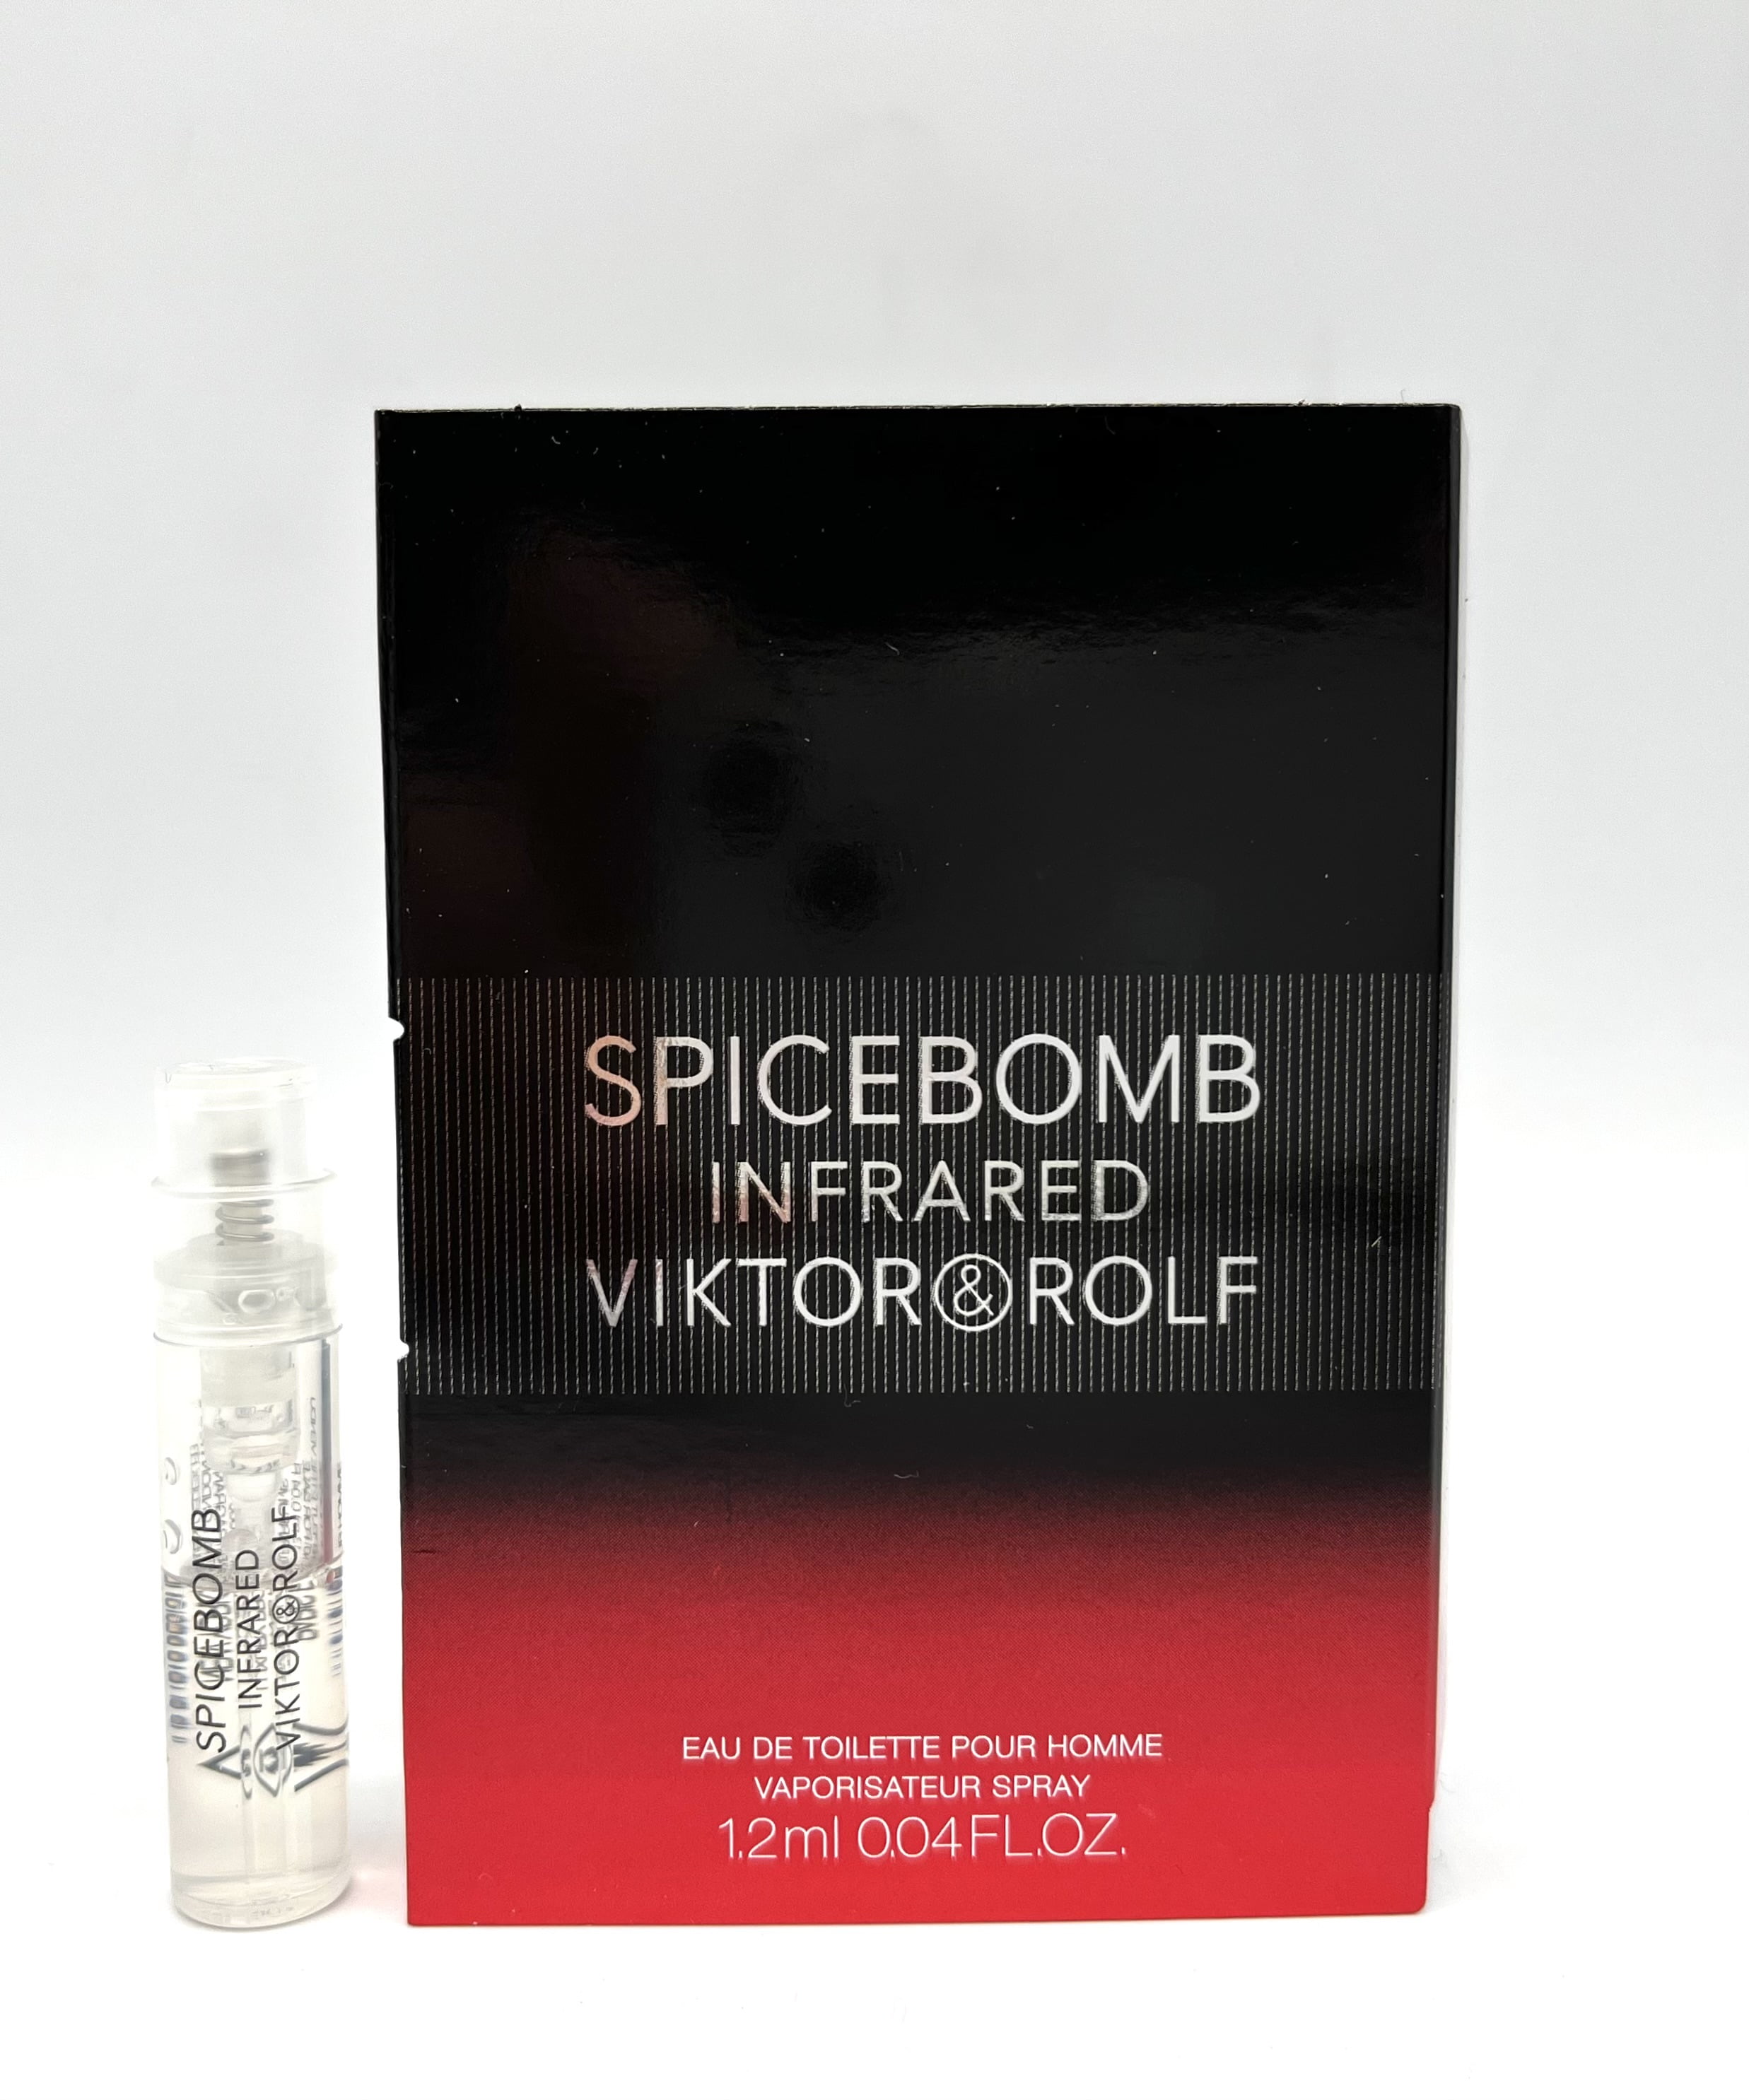 Spicebomb Infrared by Viktor & Rolf - Buy online